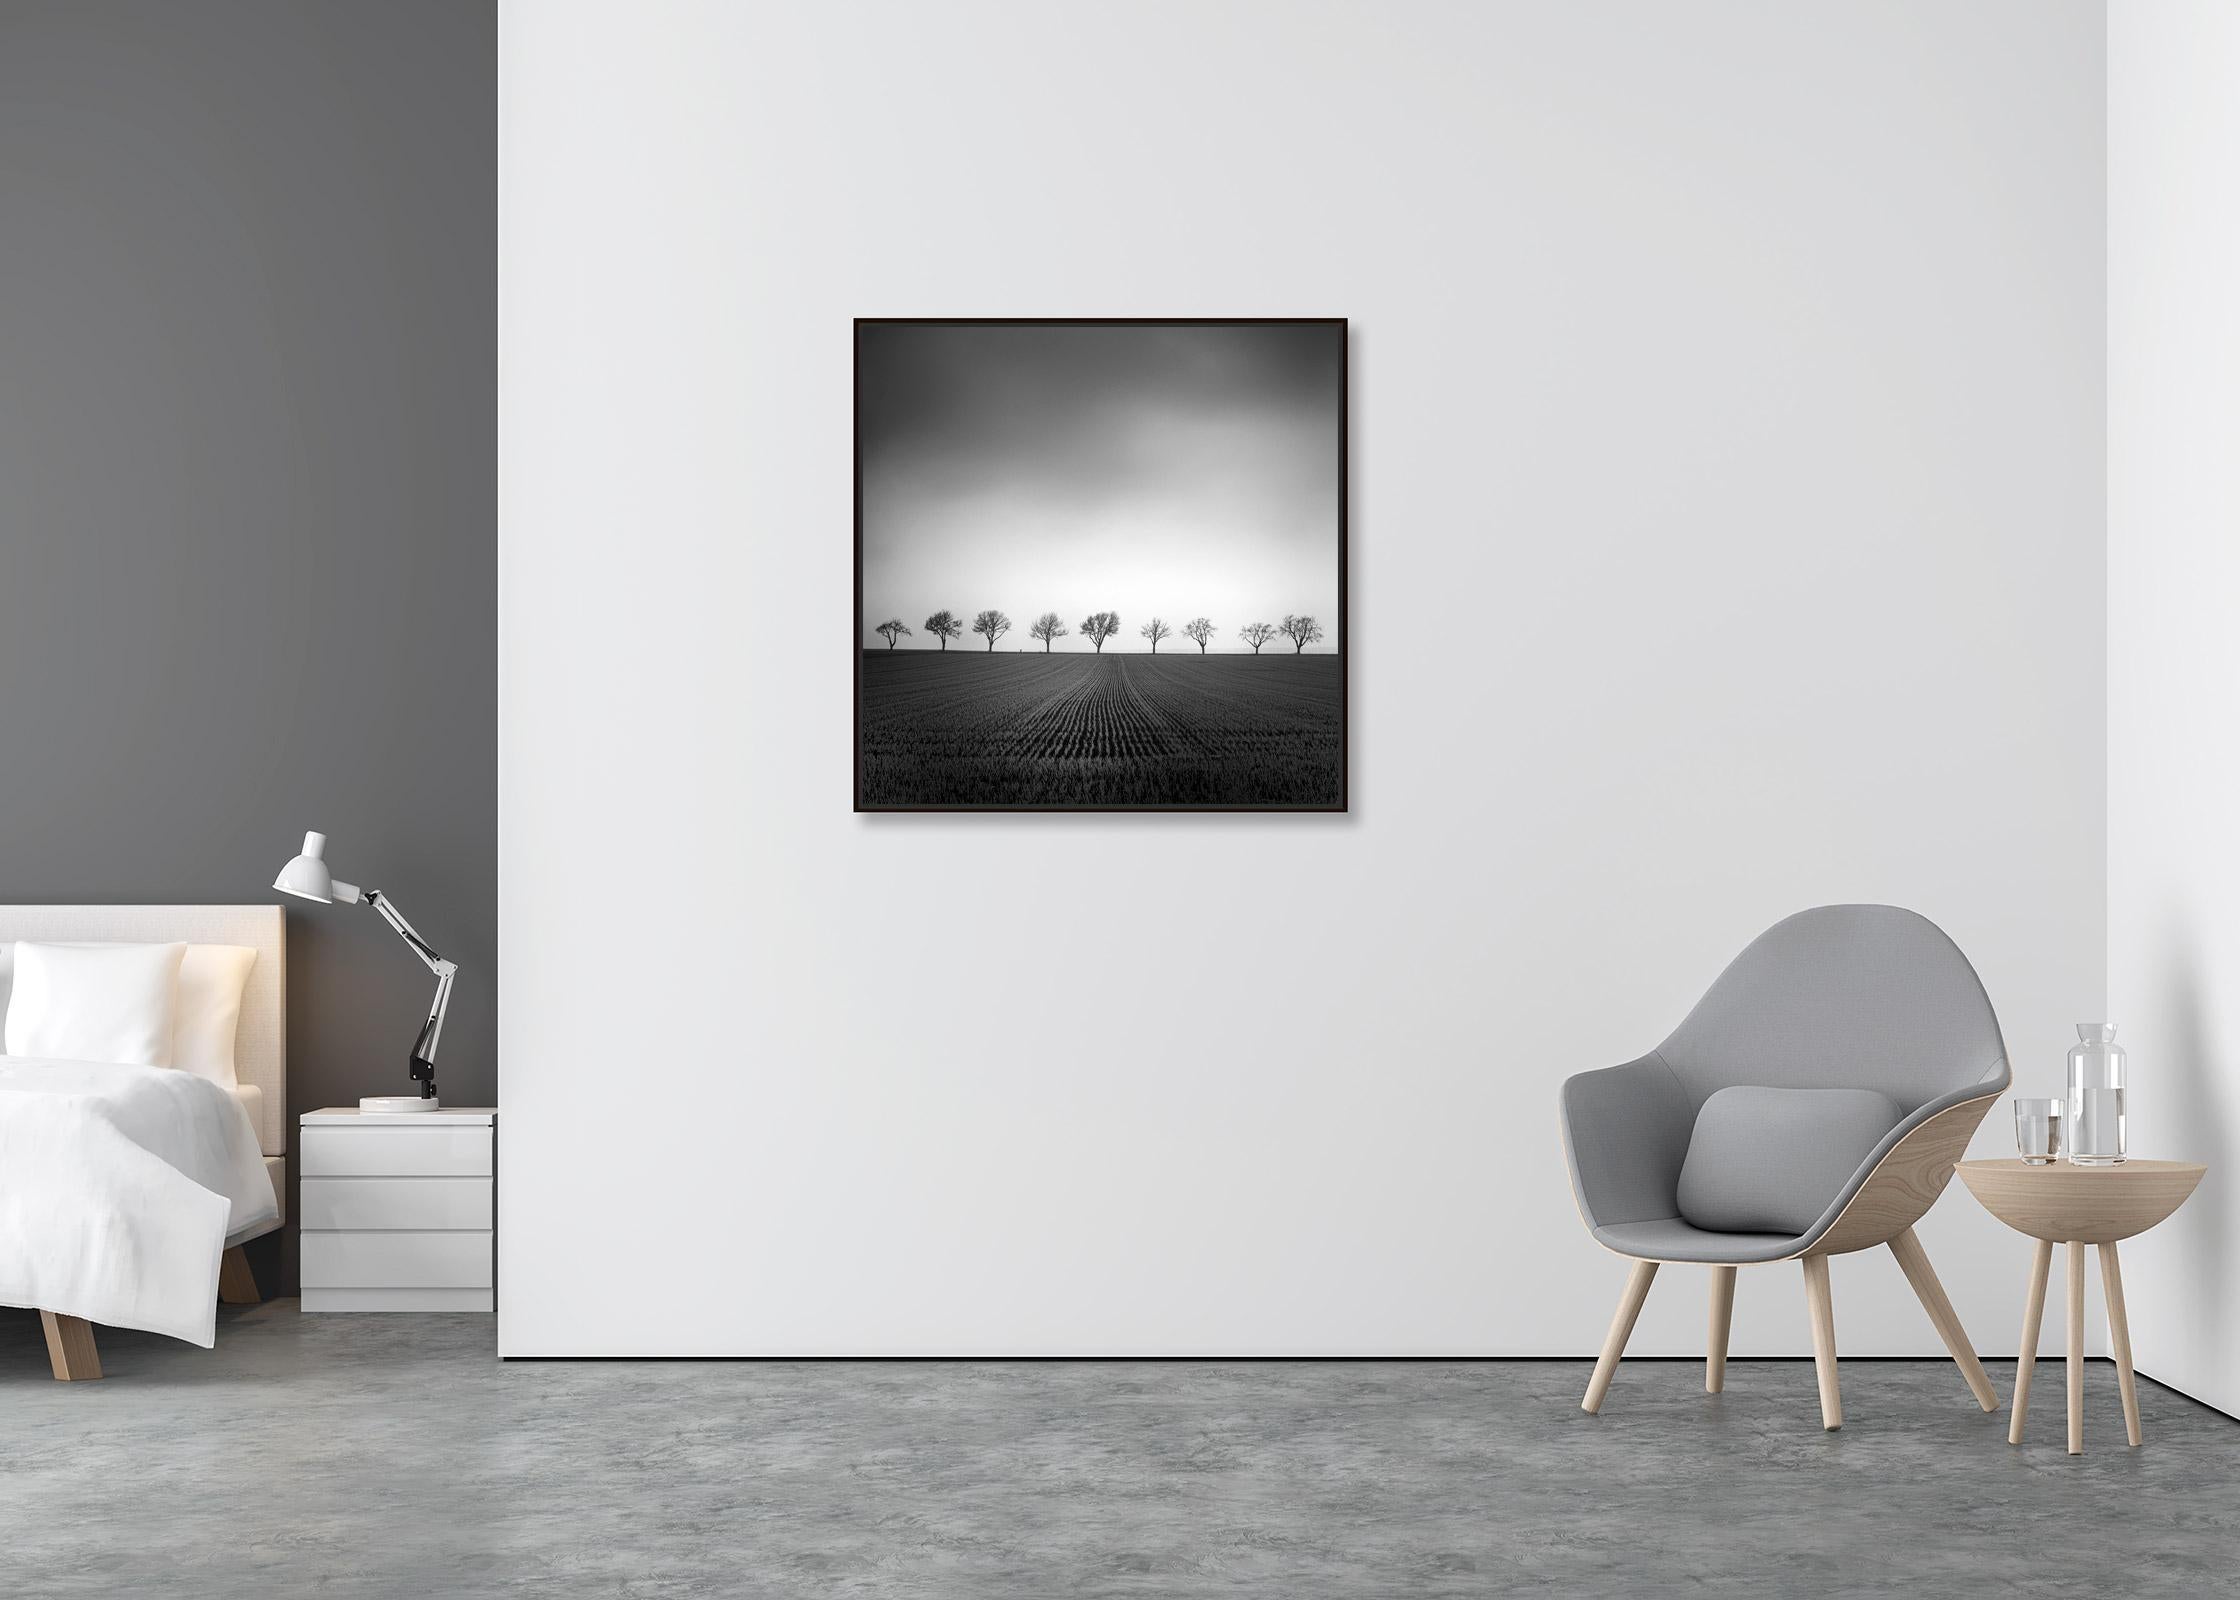 Nine Cherry Trees Corn Field black & white fine art landscape photography print - Contemporary Photograph by Gerald Berghammer